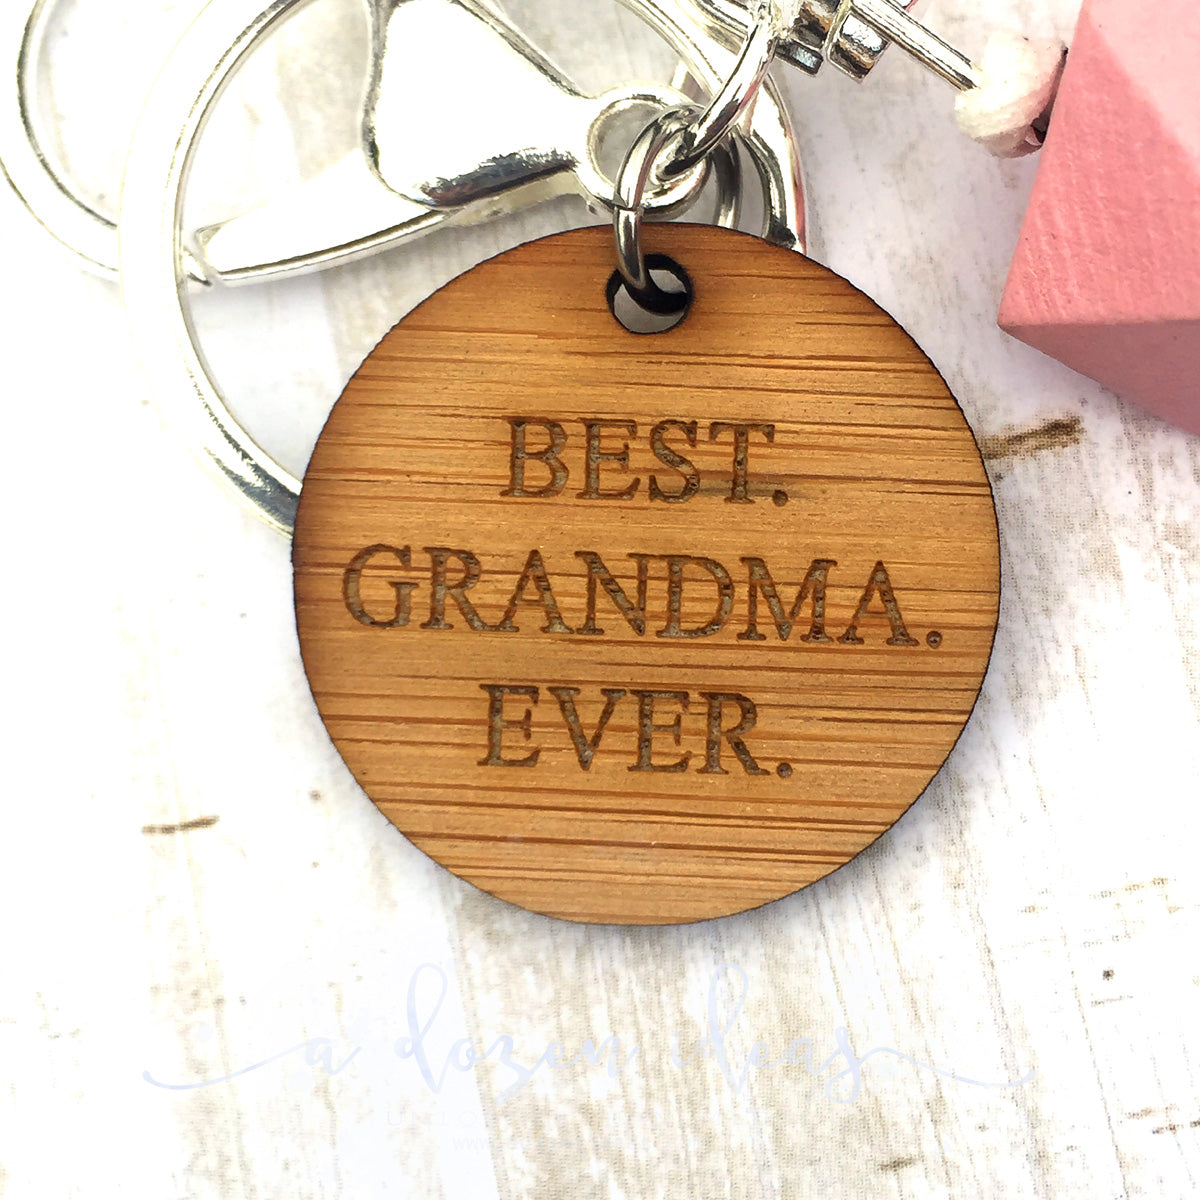 Add-on - Best. Grandma. Ever